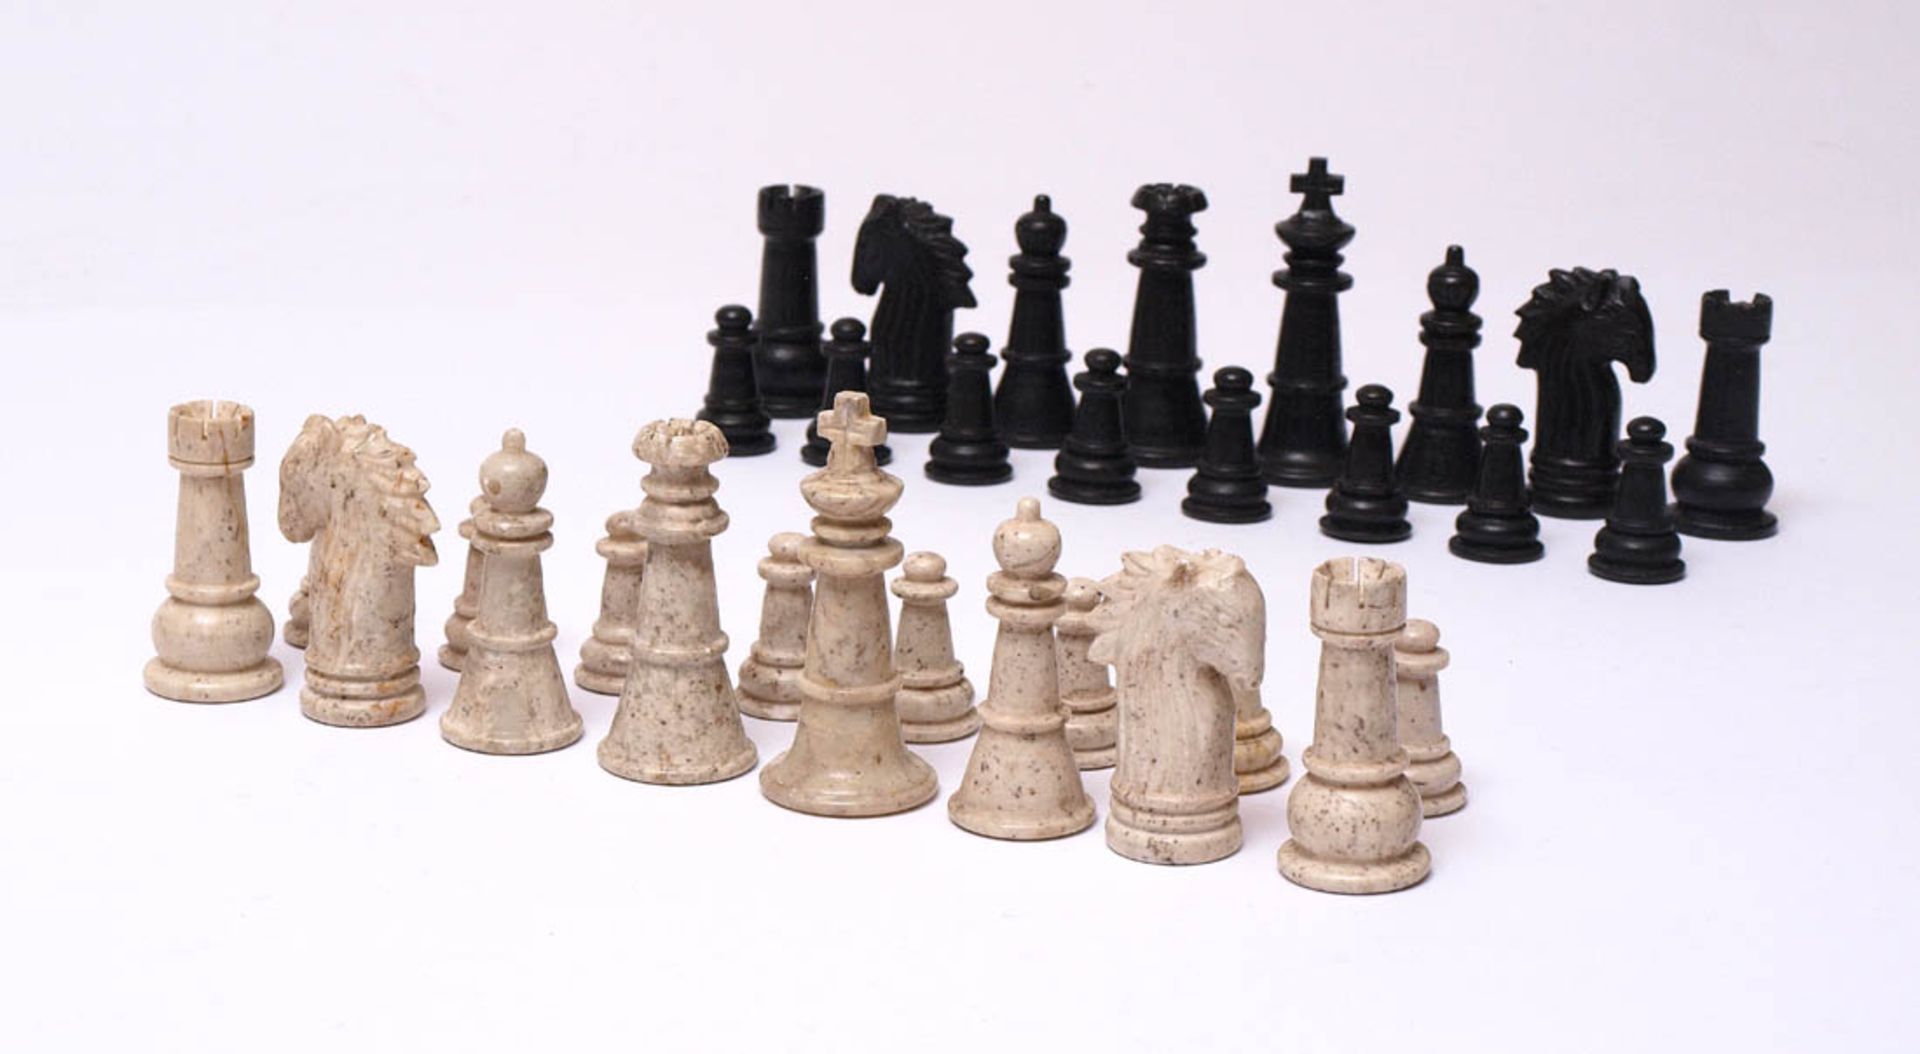 Satz SchachfigurenGedrechseltes Holz. Höhe des Königs 7cm.Aufrufpreis: 260 EUR